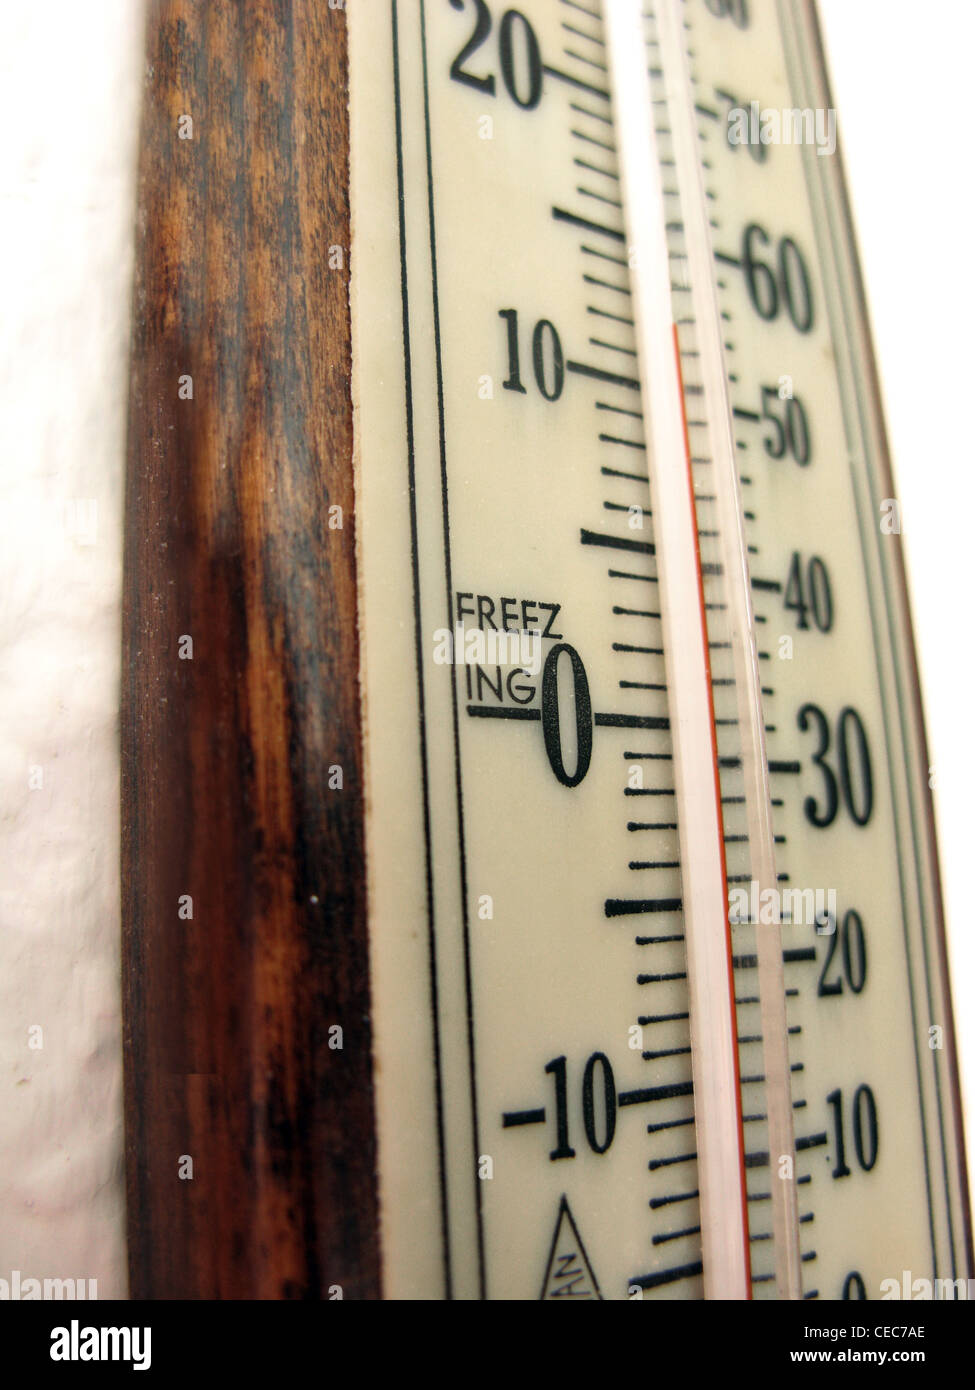 https://c8.alamy.com/comp/CEC7AE/indoor-thermometer-indicating-very-cold-temperatures-CEC7AE.jpg